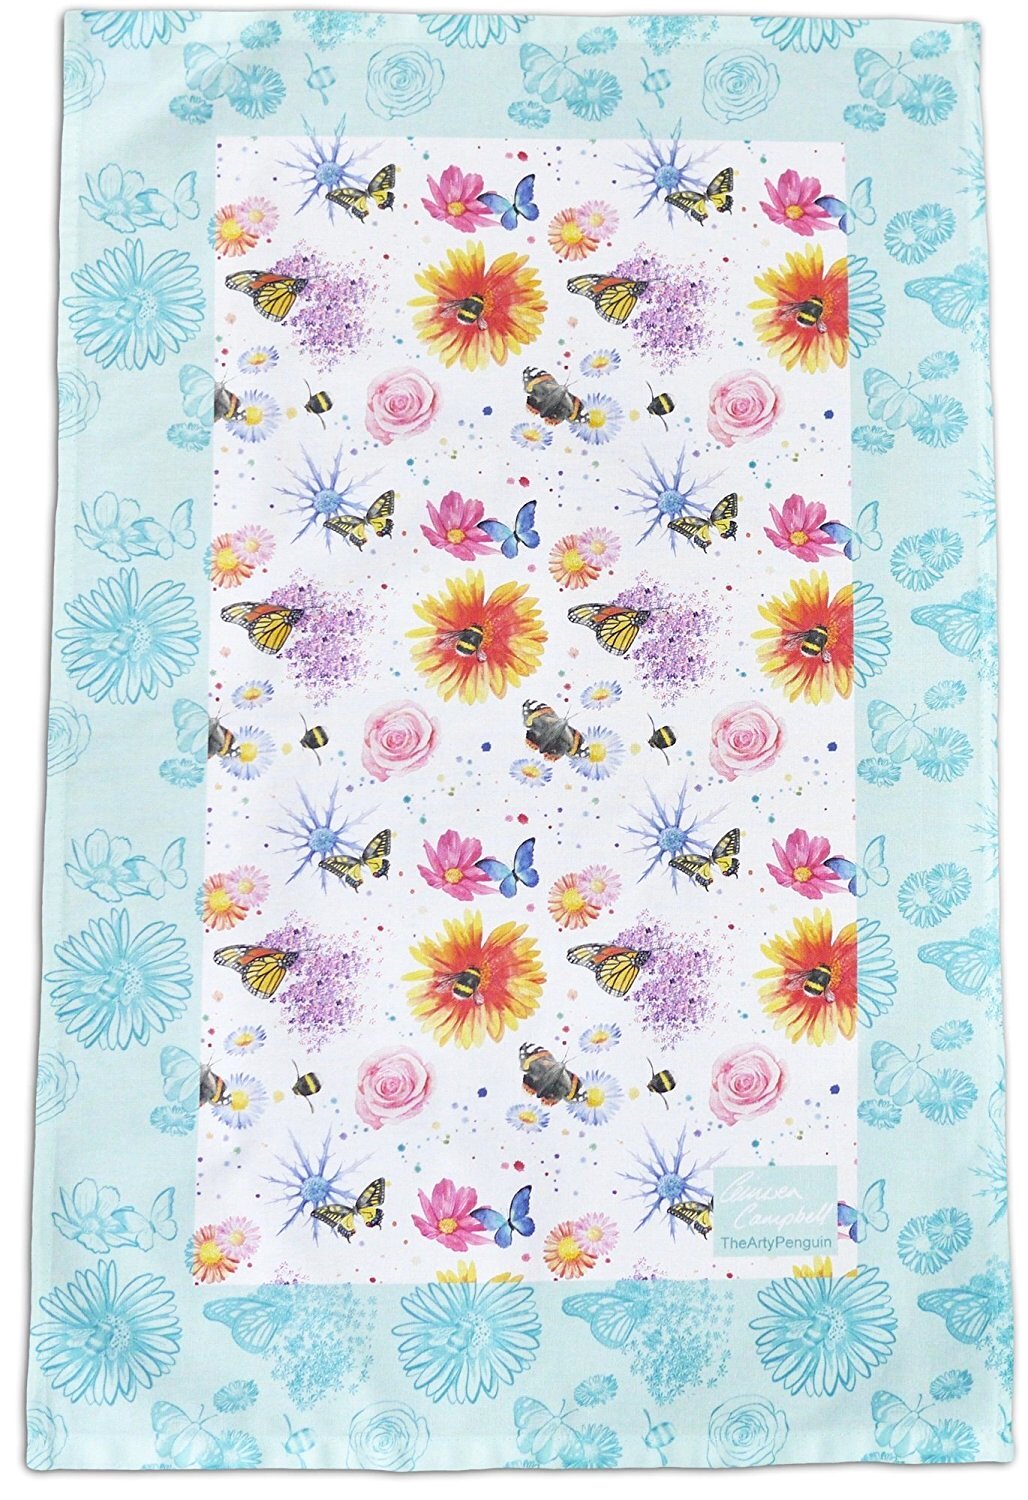 Flowers butterflies and bees gift tea towel